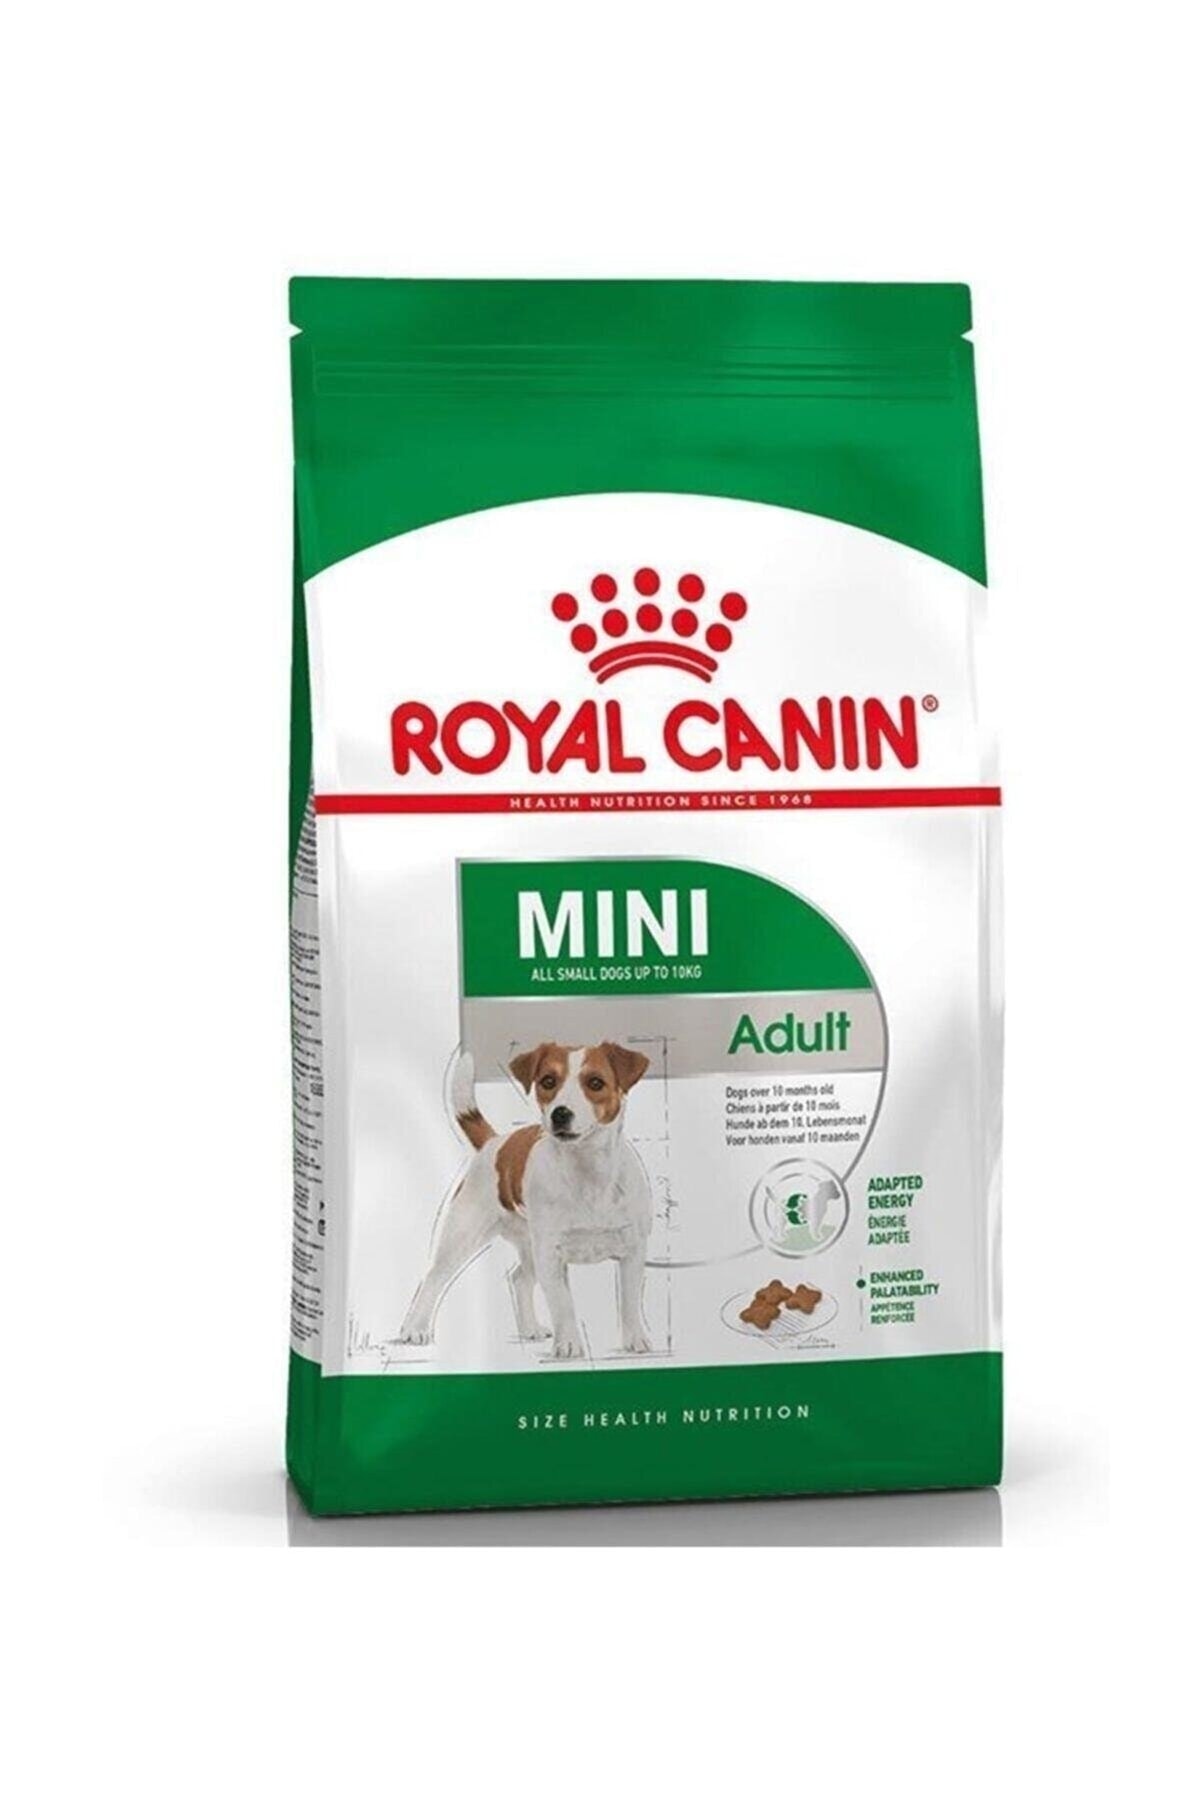 Royal Canin Neo Pet Market Mini Adult Yetişkin Köpek Maması 8 Kg